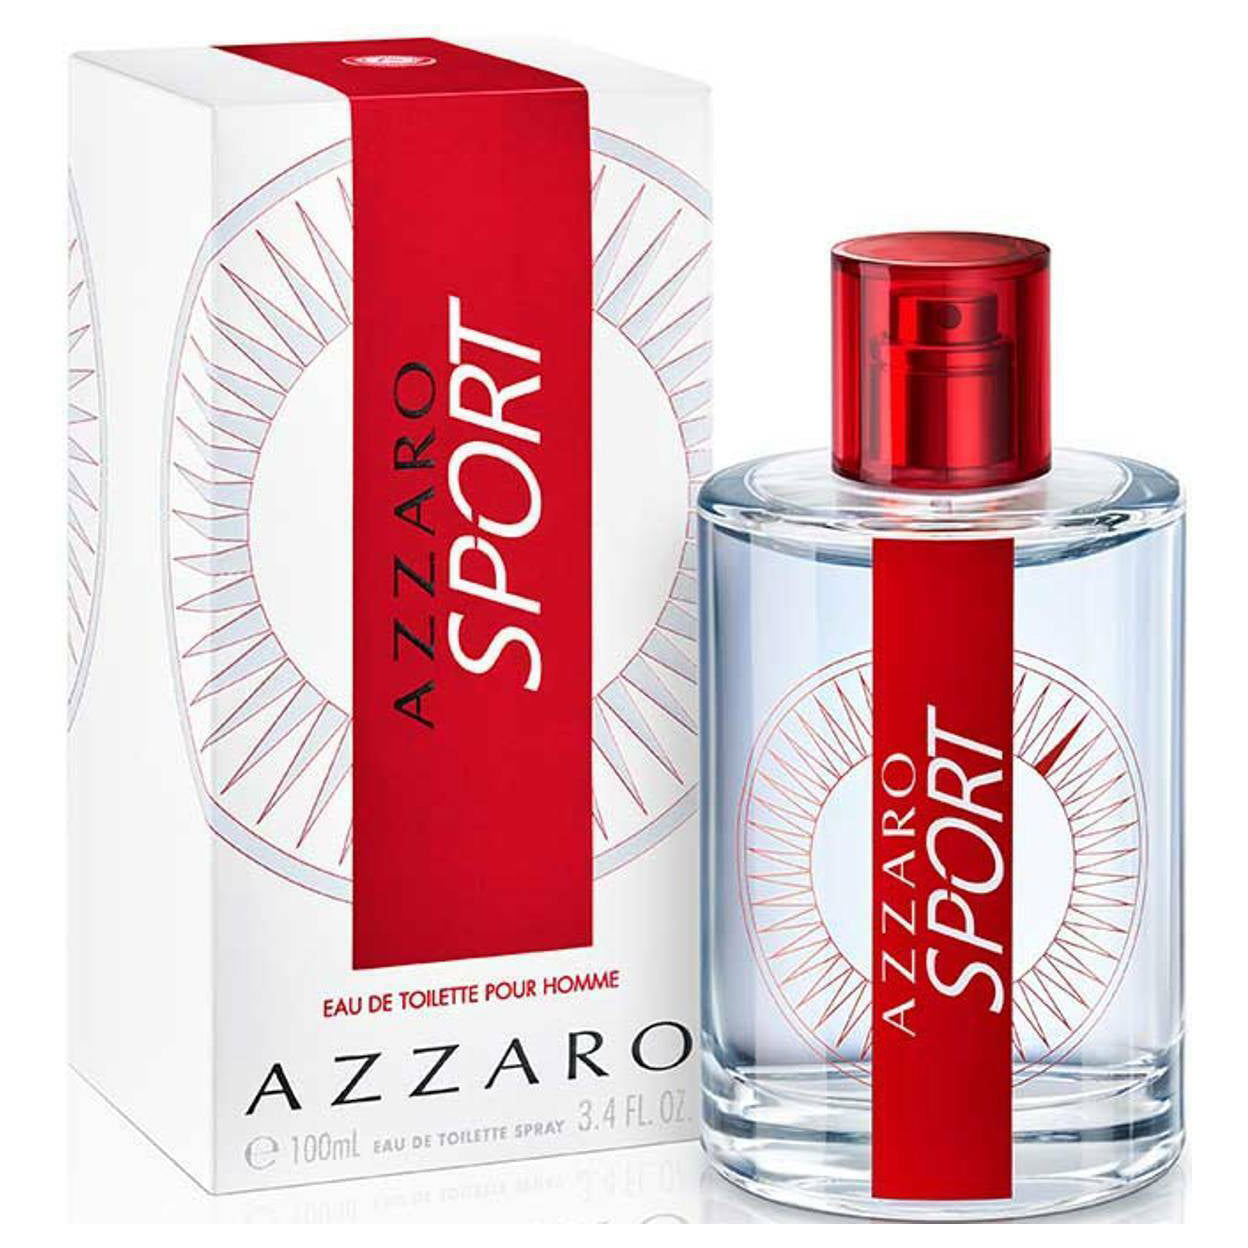 Azzaro Sport by Azzaro 3.4 oz Eau de Toilette Spray / Men